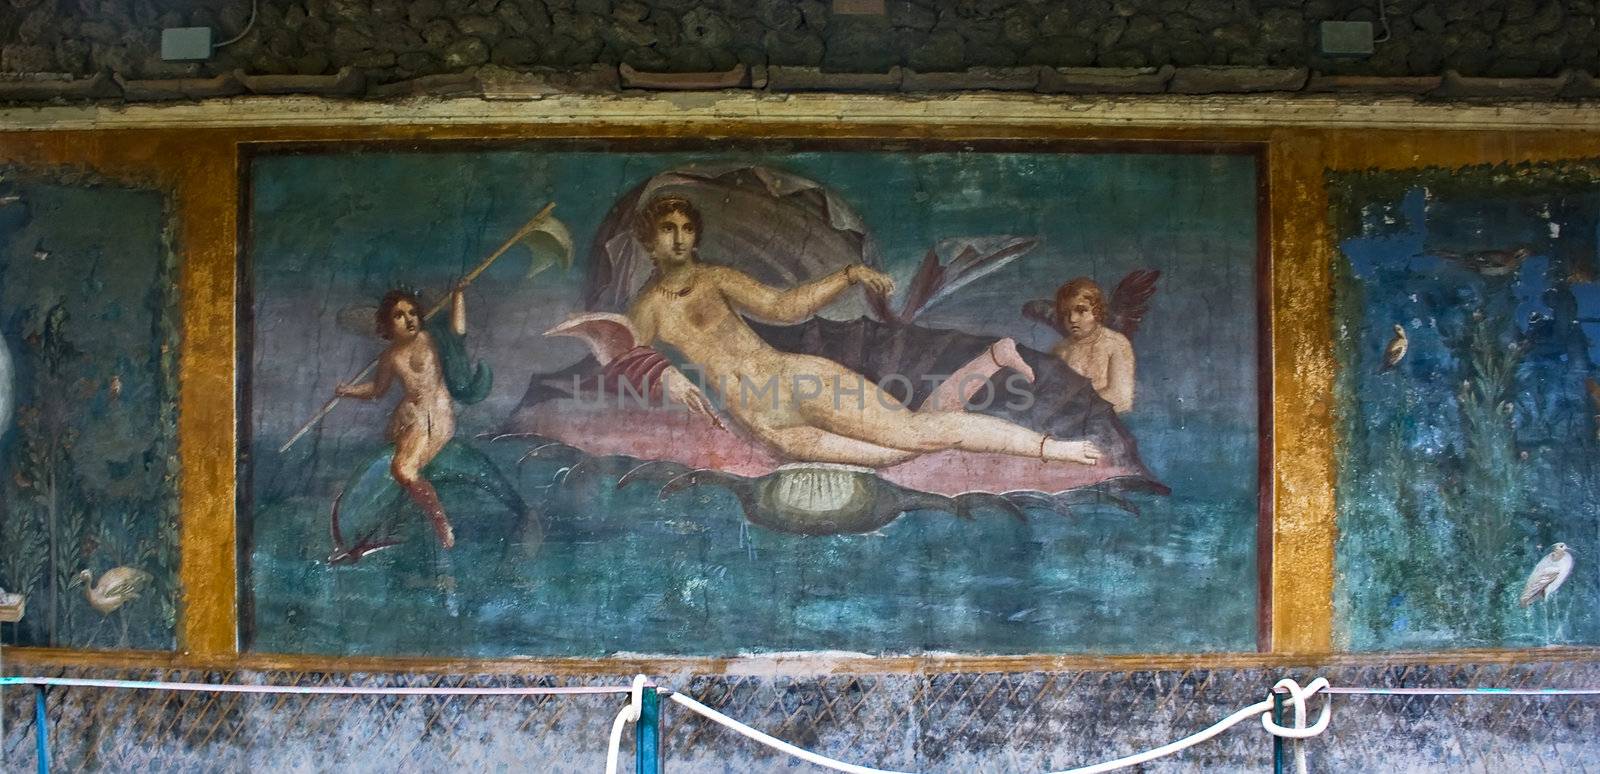 Roman wall painting Venus in Pompeii, Italy